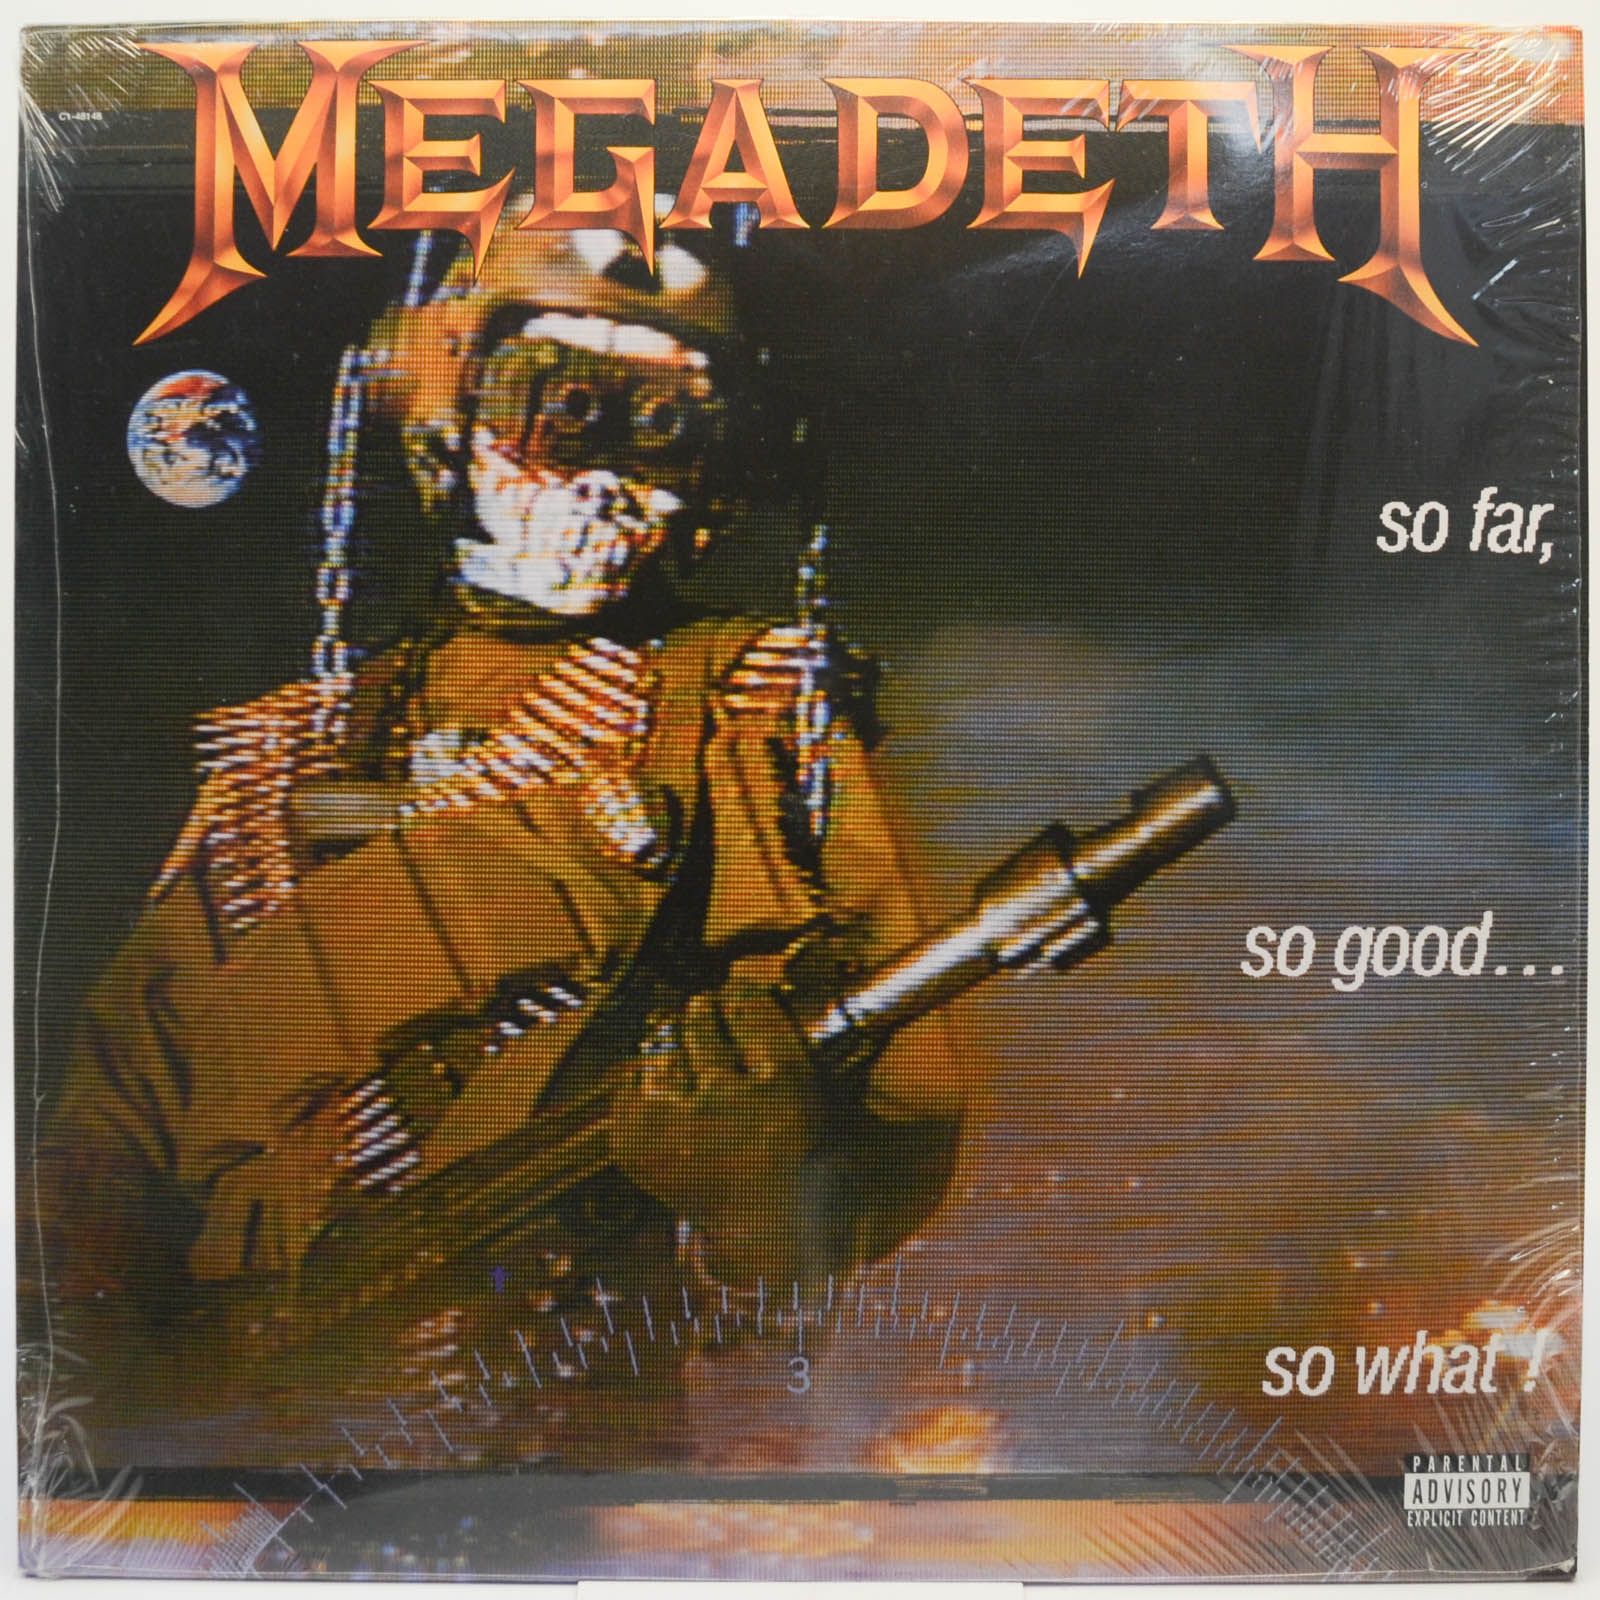 Megadeth rust in peace обложка фото 61